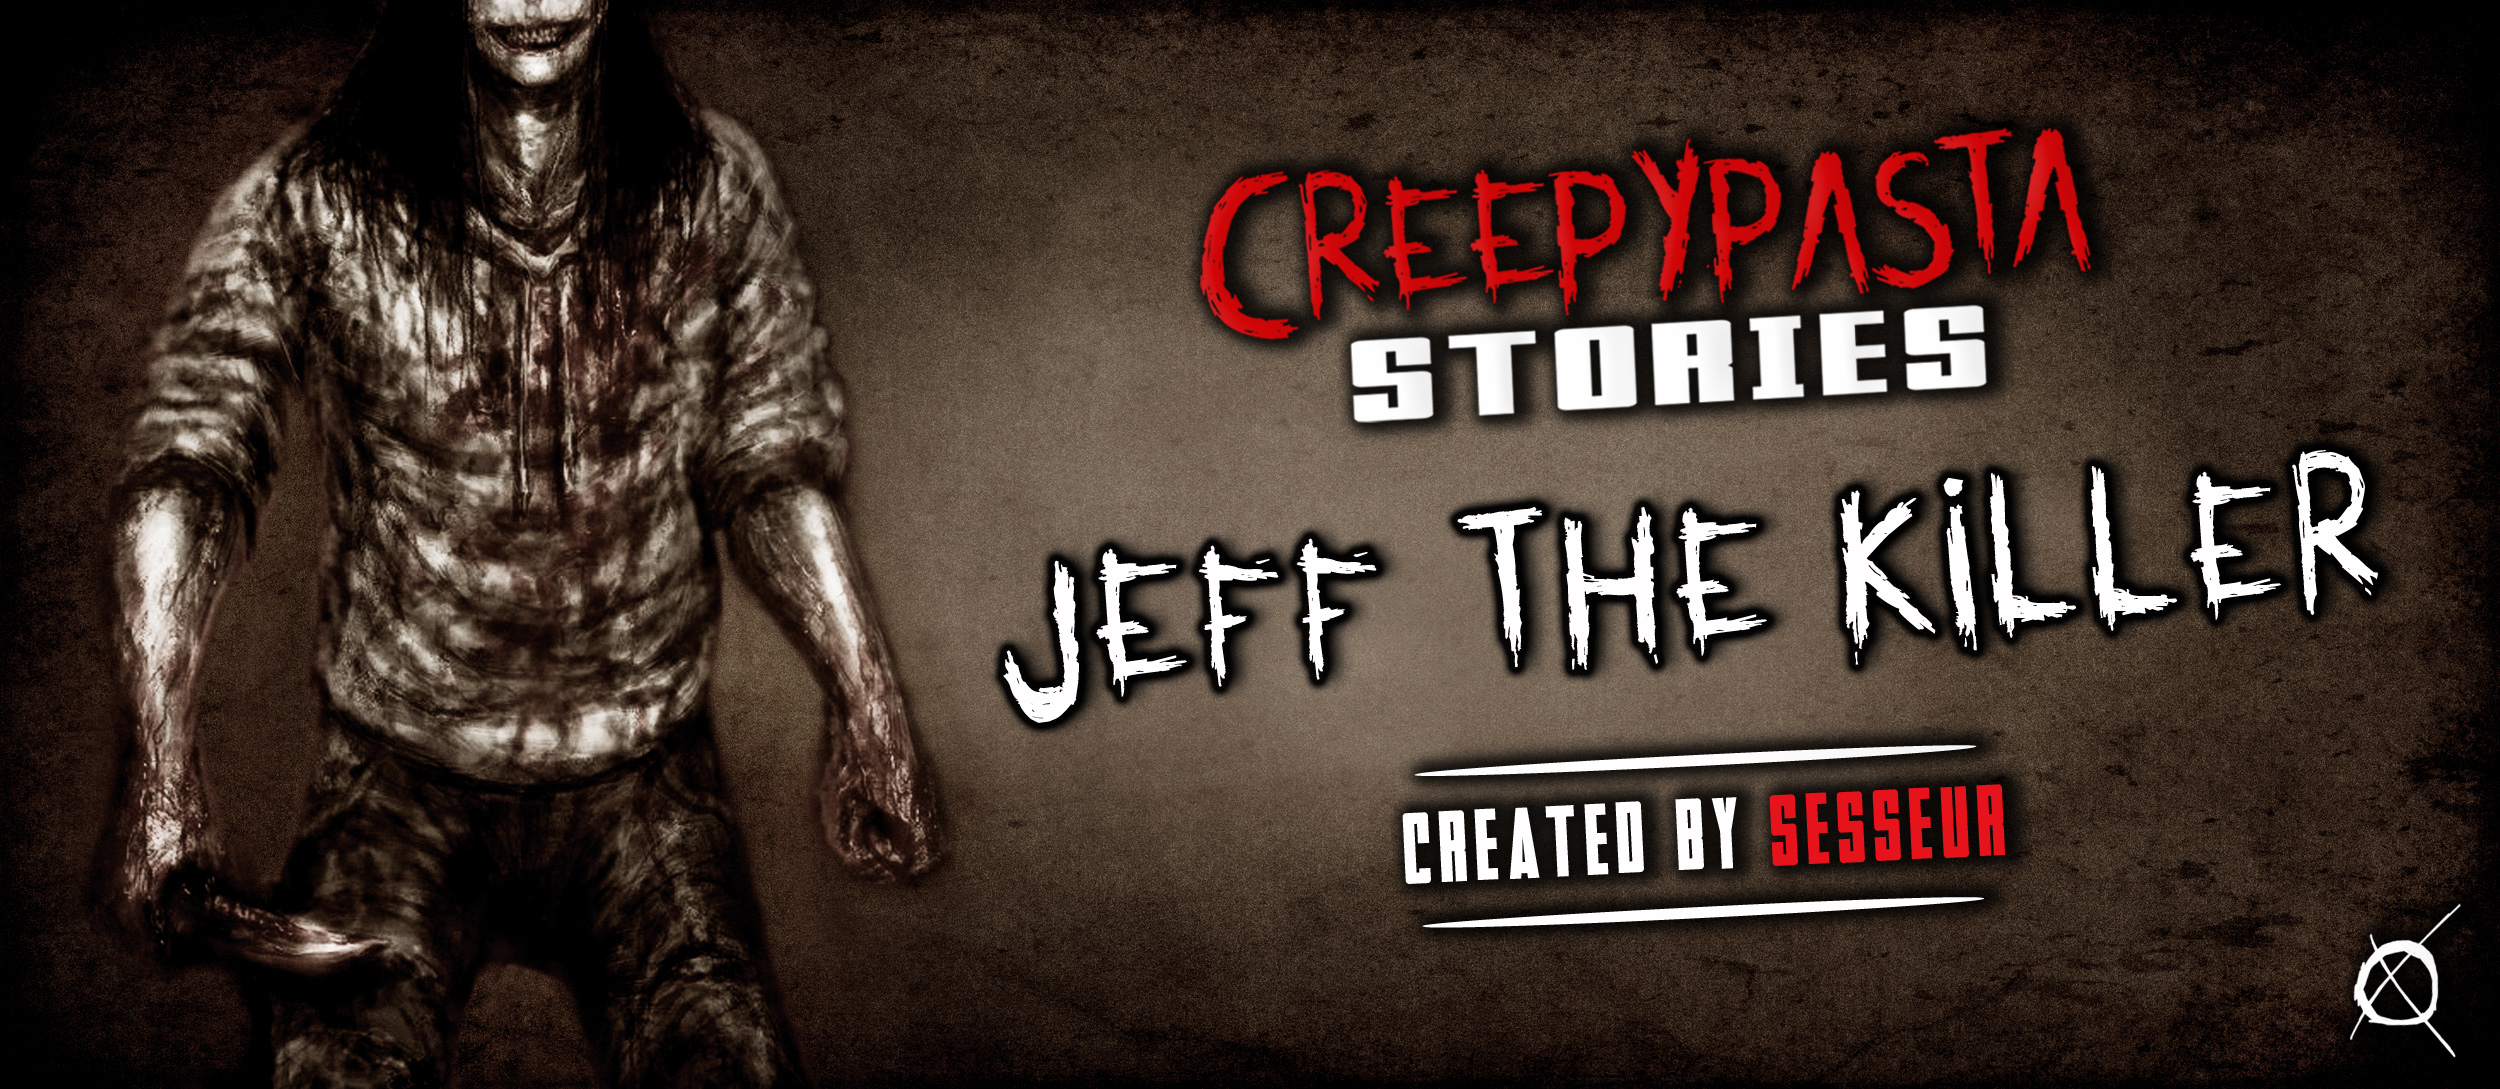 Jeff The Killer  Jeff the killer, Creepypasta funny, Creepypasta